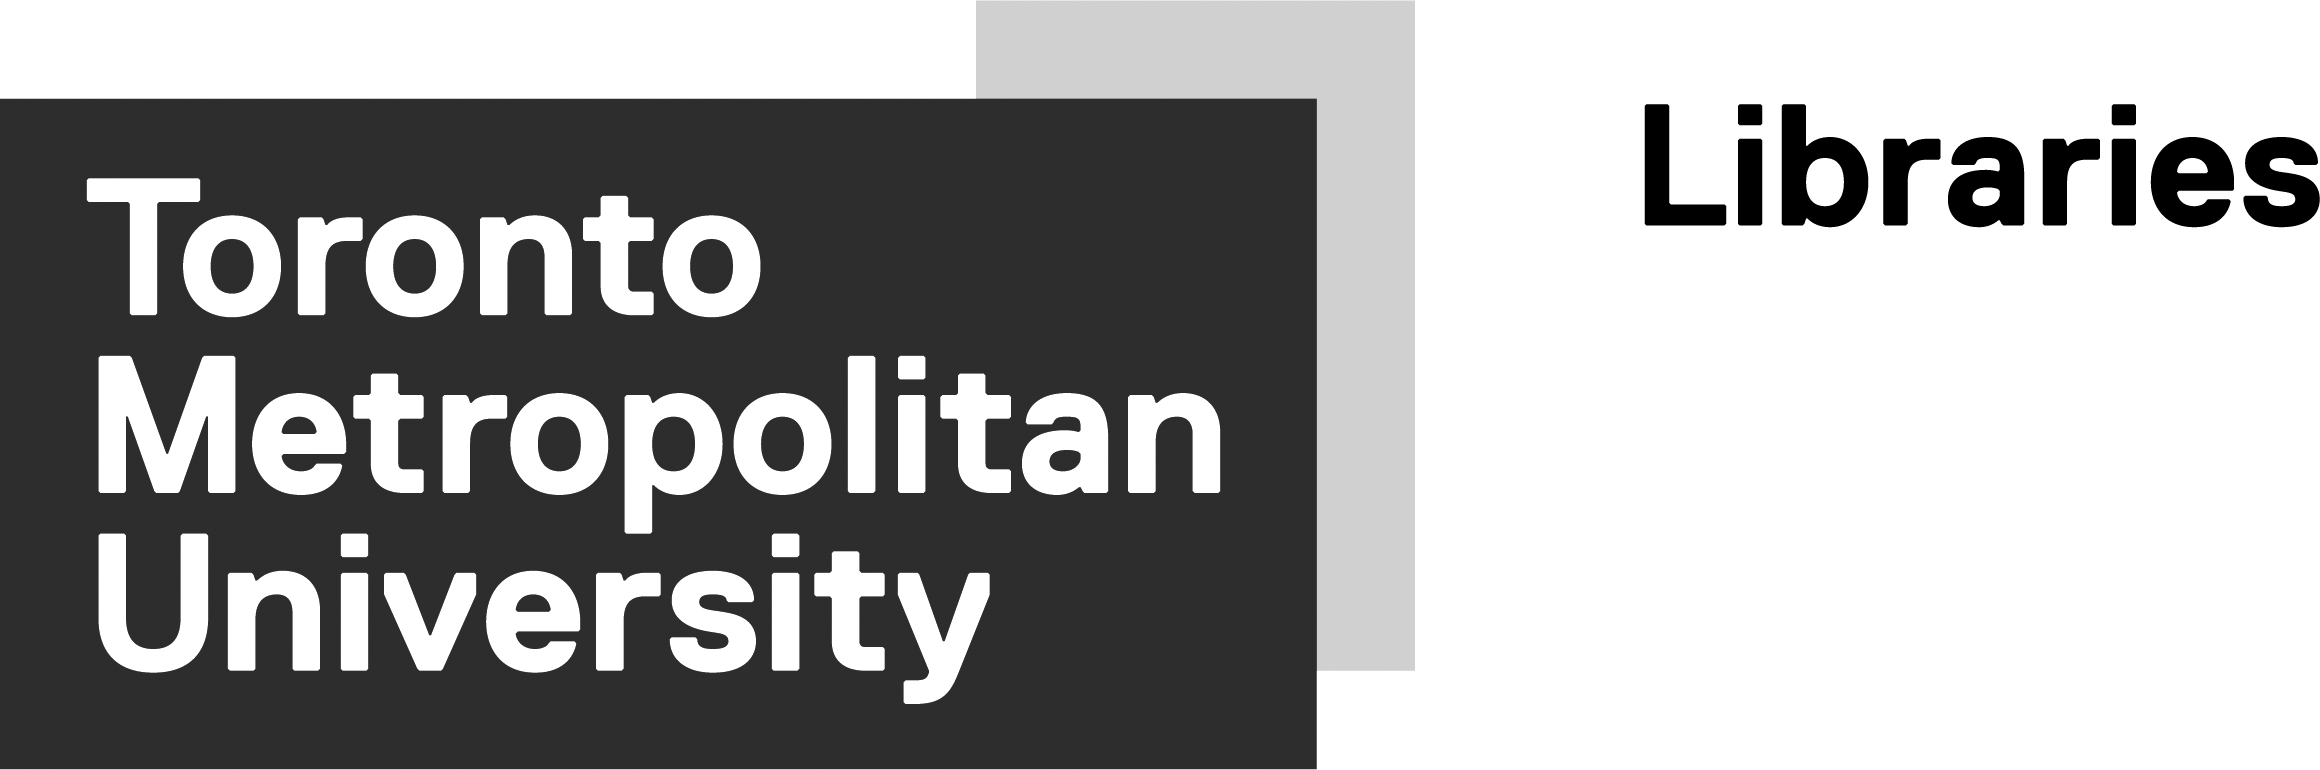 Toronto Metropolitan University Libraries logo